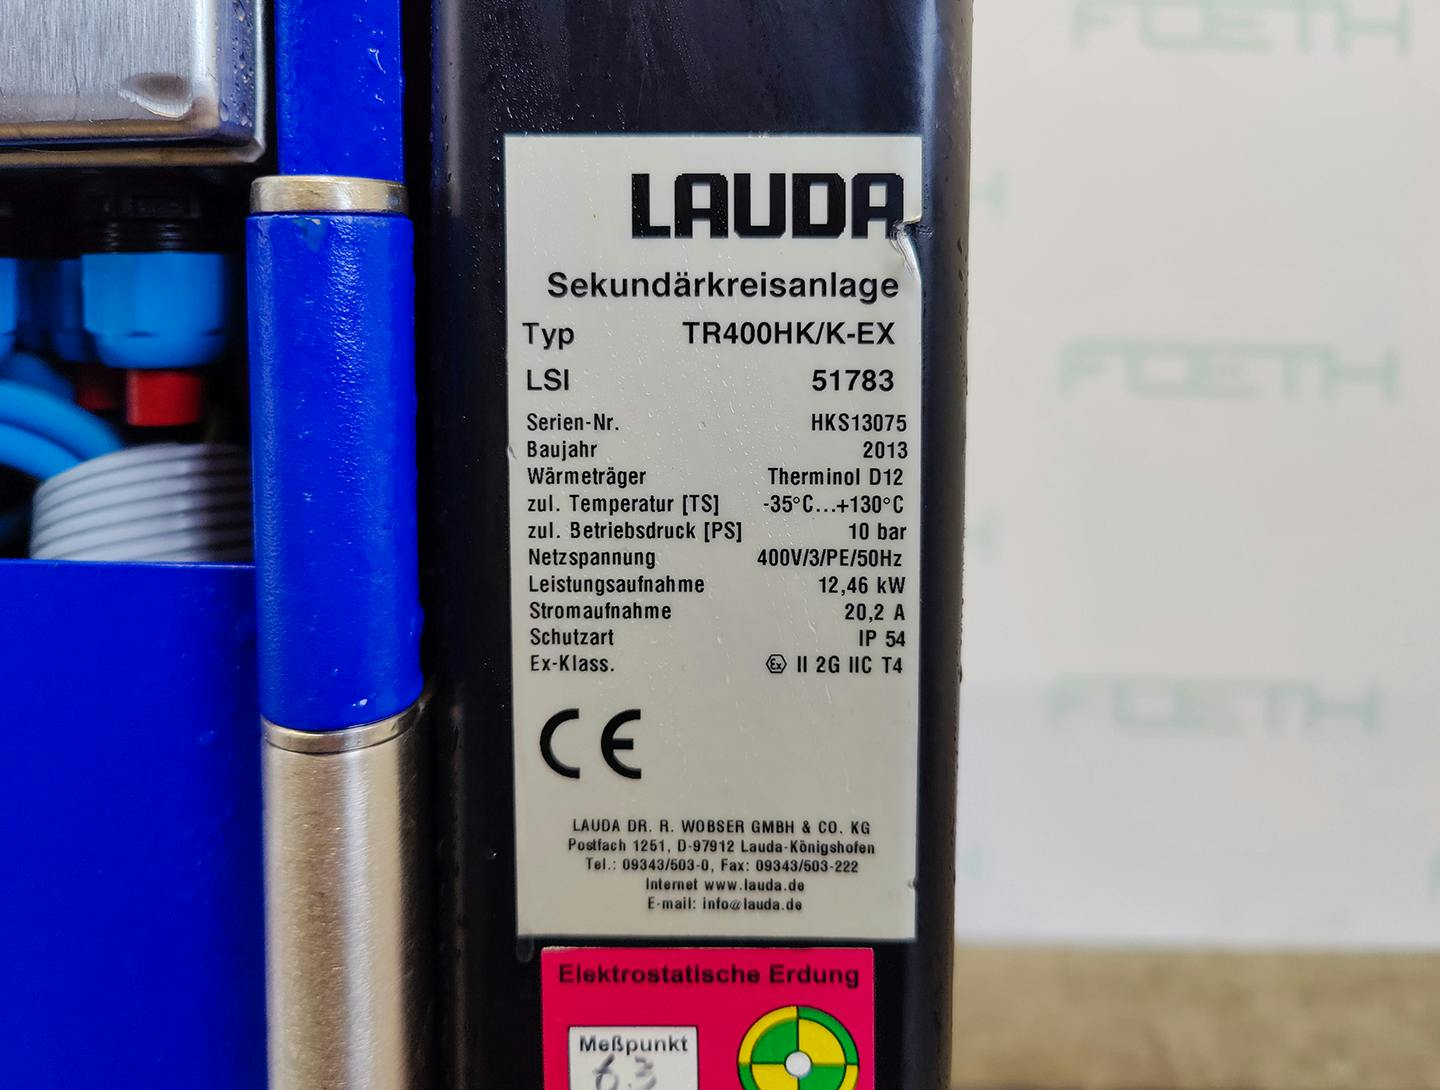 Lauda TR400 HK/K-EX "secondary circuit system" - Temperiergerät - image 6